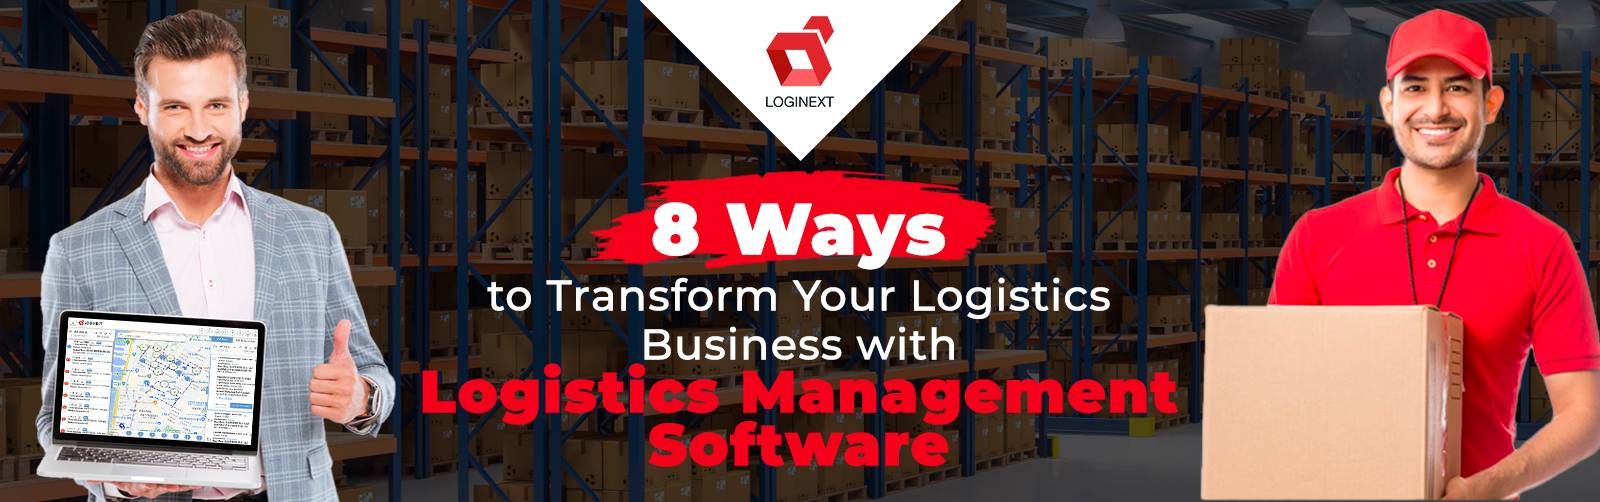 8 Ways to Transform Your Logistics Business with an Ideal Logistics Management Software 